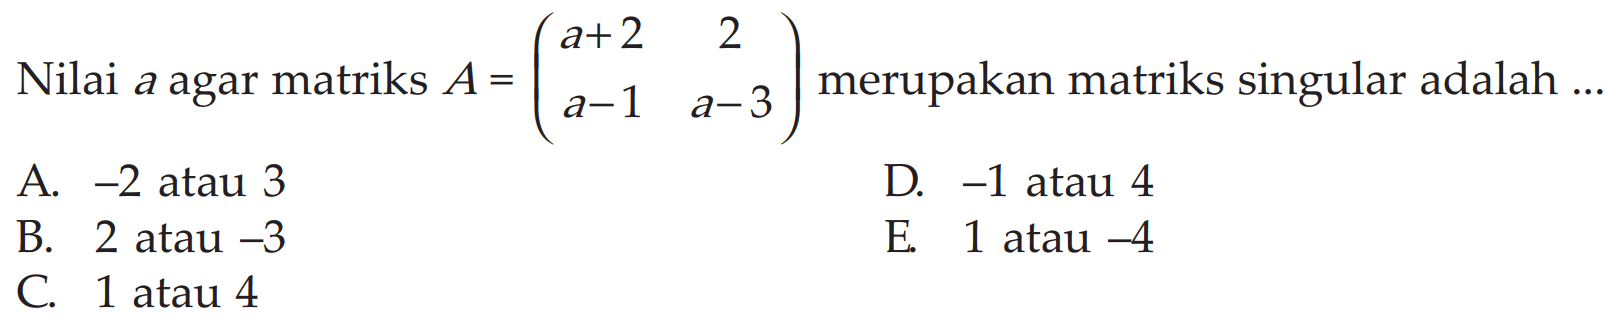 Nilai a agar matriks A=(a+2 2 a-1 a-3) merupakan matriks singular adalah ...